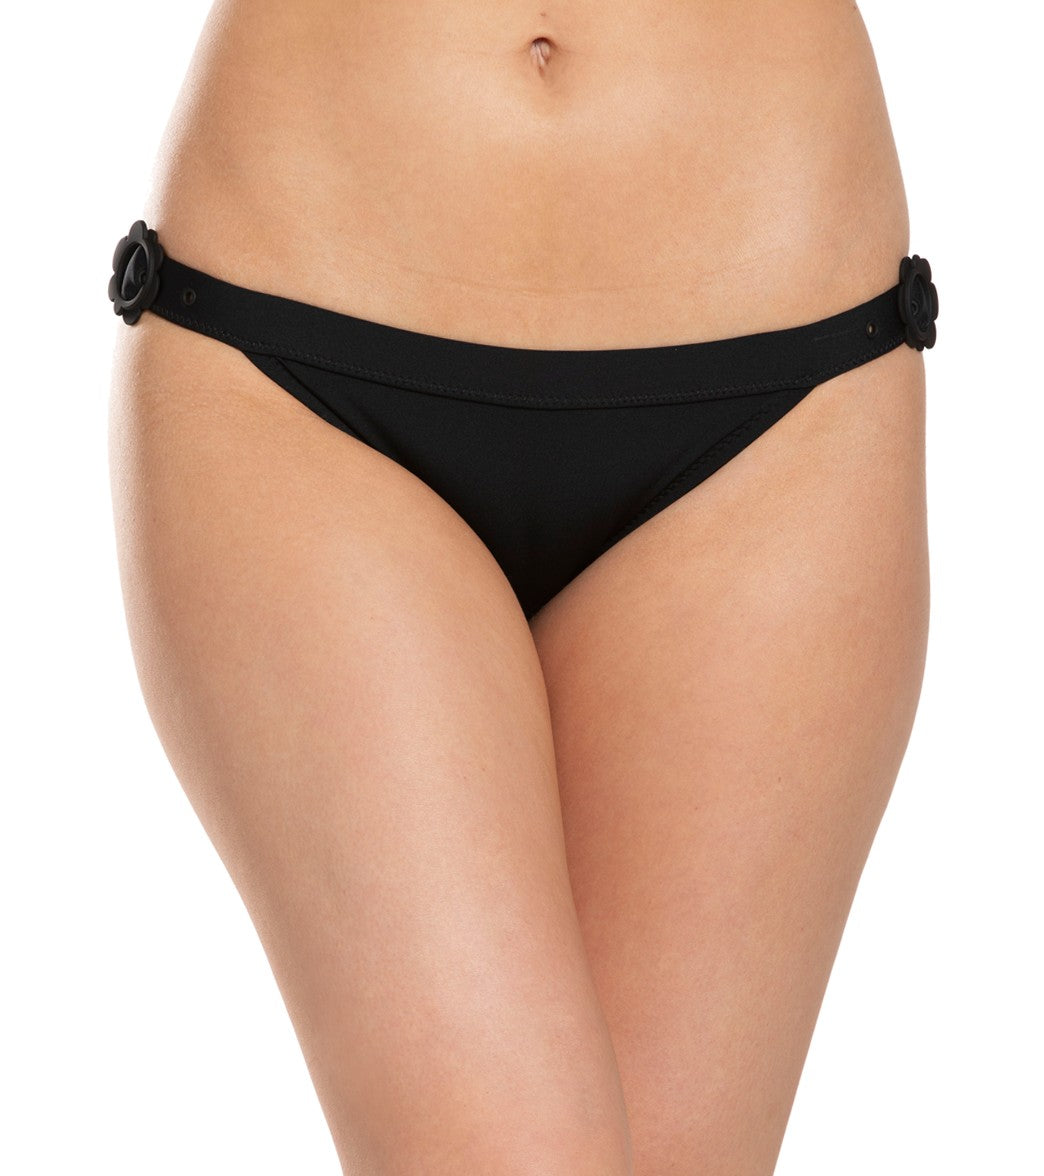 Kate Spade New York Daisy Buckle Bikini Bottom - Black Medium - Swimoutlet.com